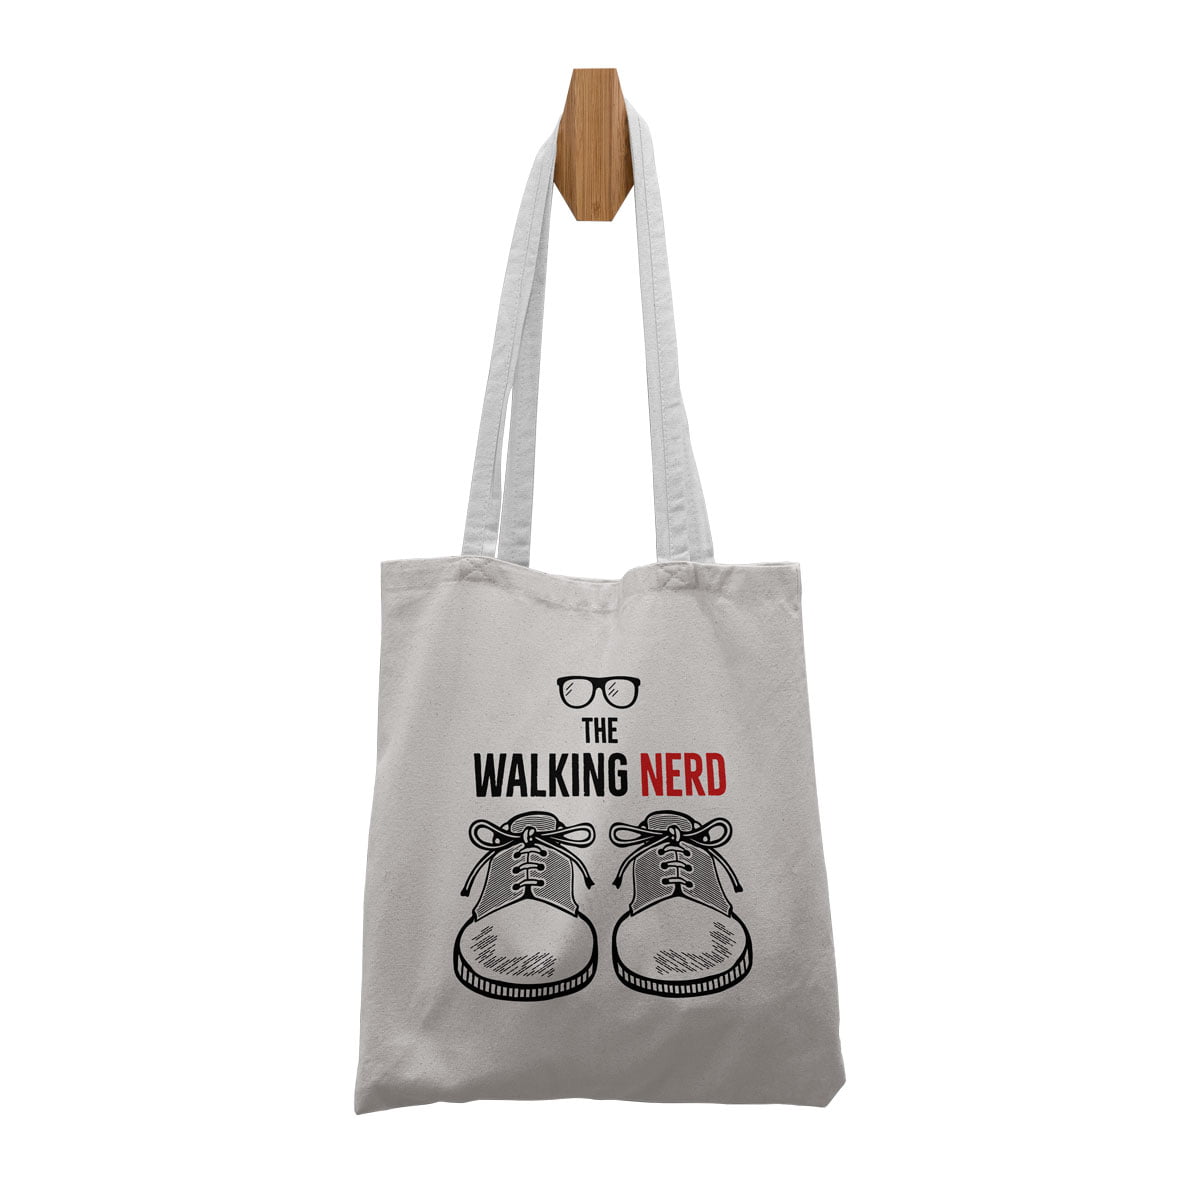 The walking nerd canta - the walking nerd tasarımlı bez çanta - figurex